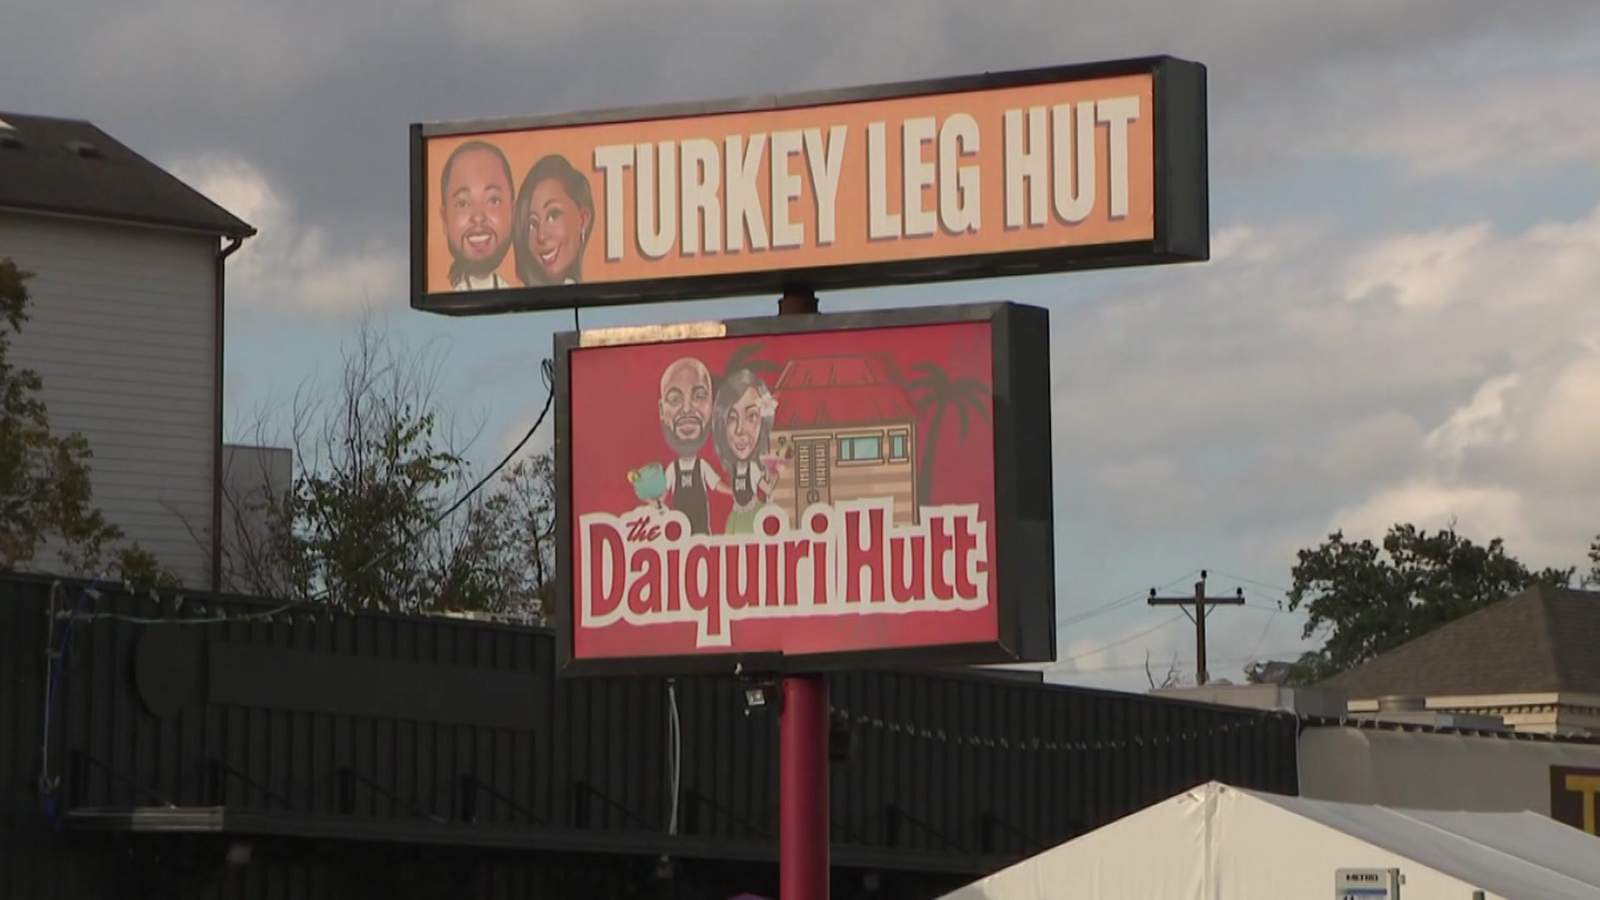 Turkey Leg Hut: A timeline of legal troubles dogging the popular restaurant in Houston’s Third Ward